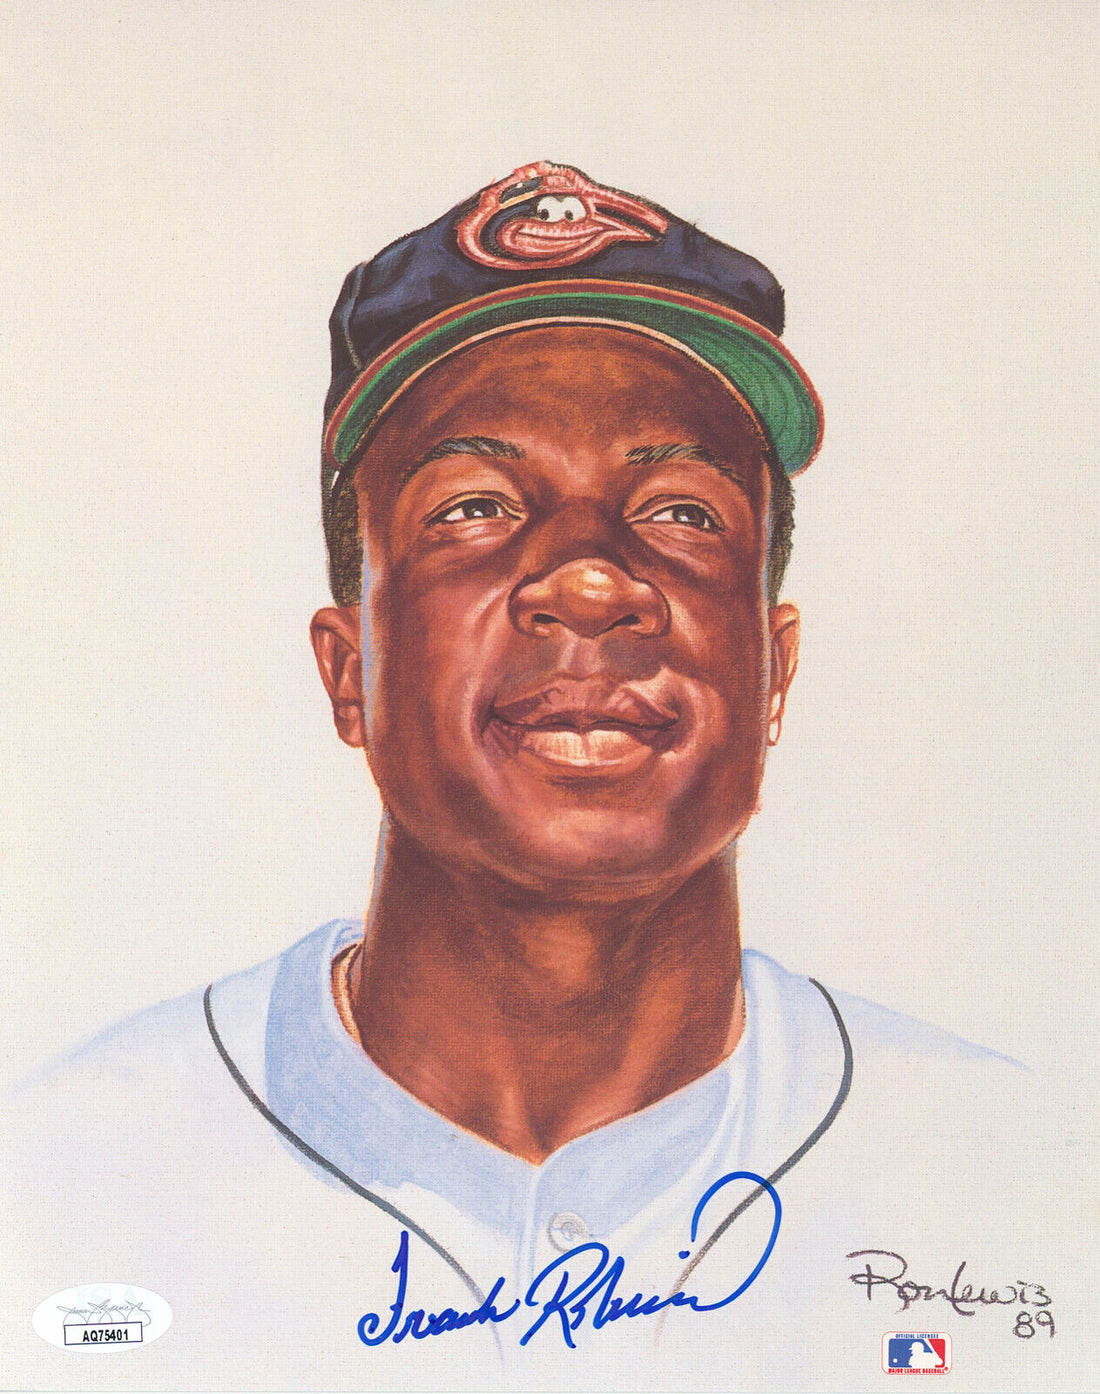 Frank Robinson Signed 8x10 Photo, Ron Lewis. Baltimore Orioles HOF. JSA